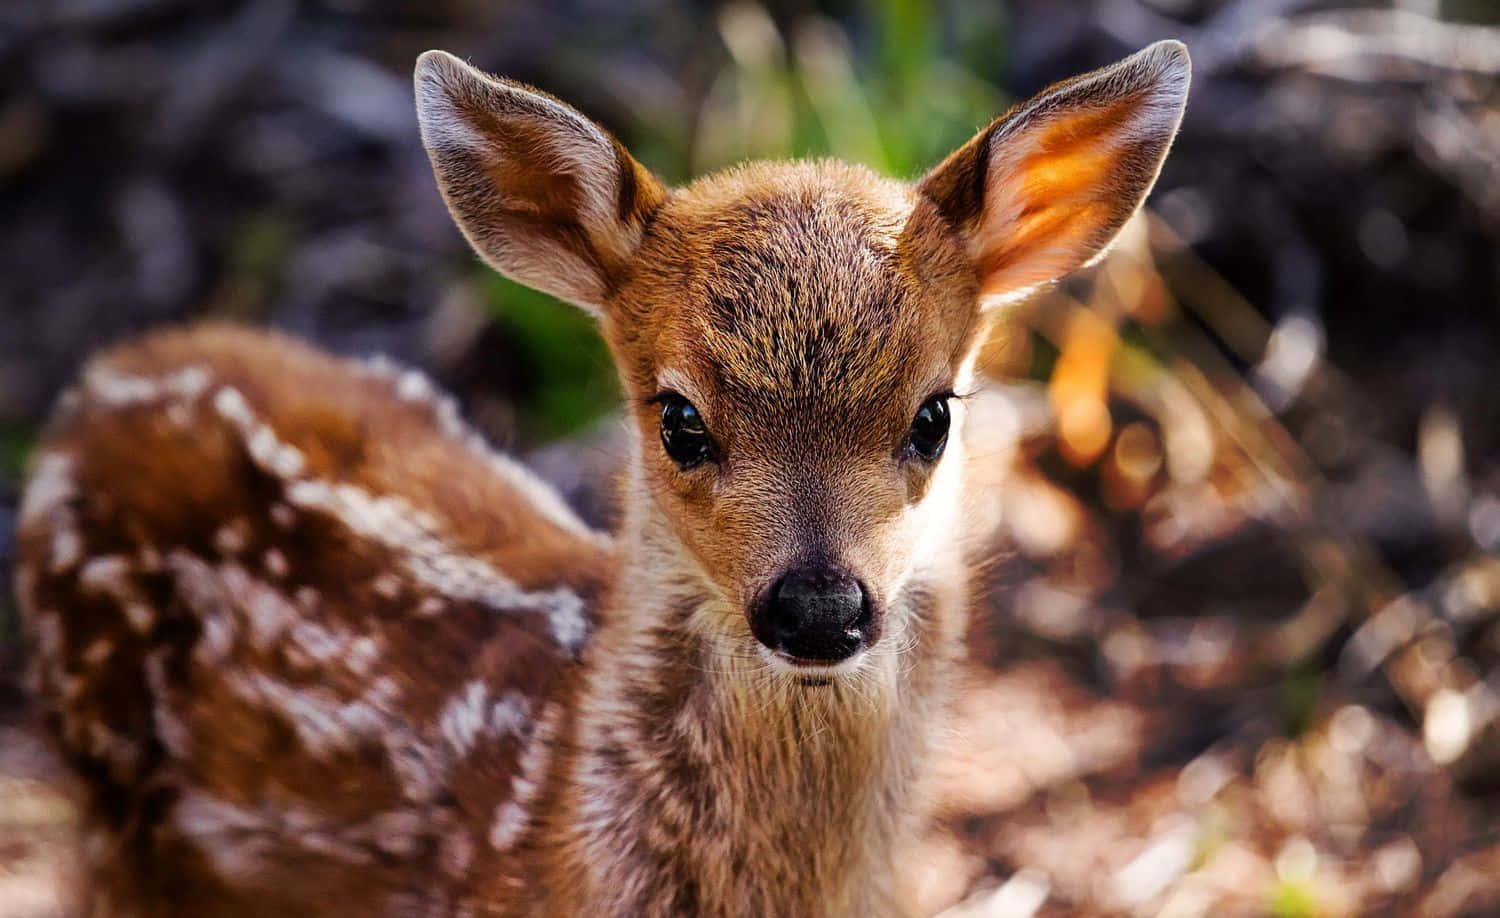 A Baby Deer Is Standing In The Woods